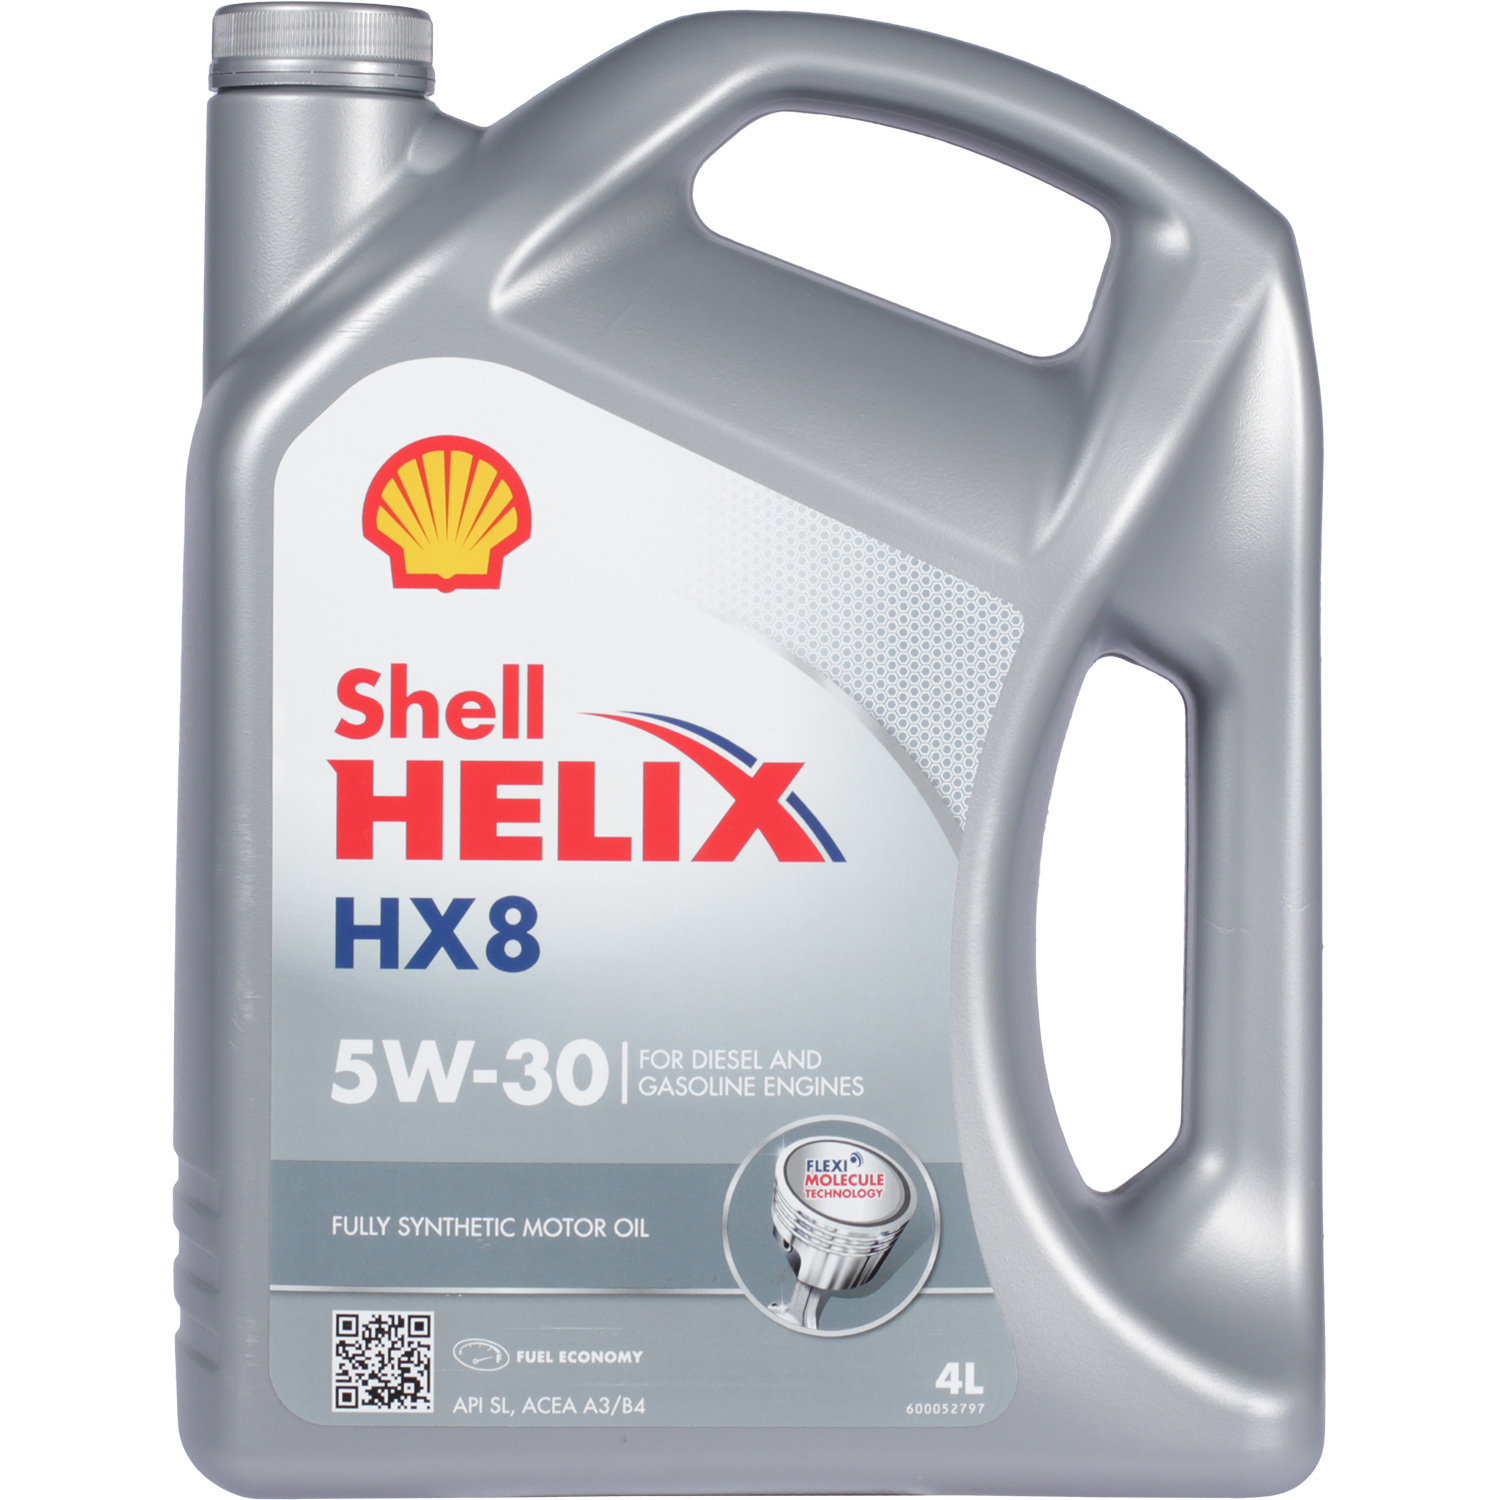 Shell Моторное масло Shell Helix HX8 5W-30, 4 л моторное масло shell helix hx8 ect 5w 30 4 л синтетическое